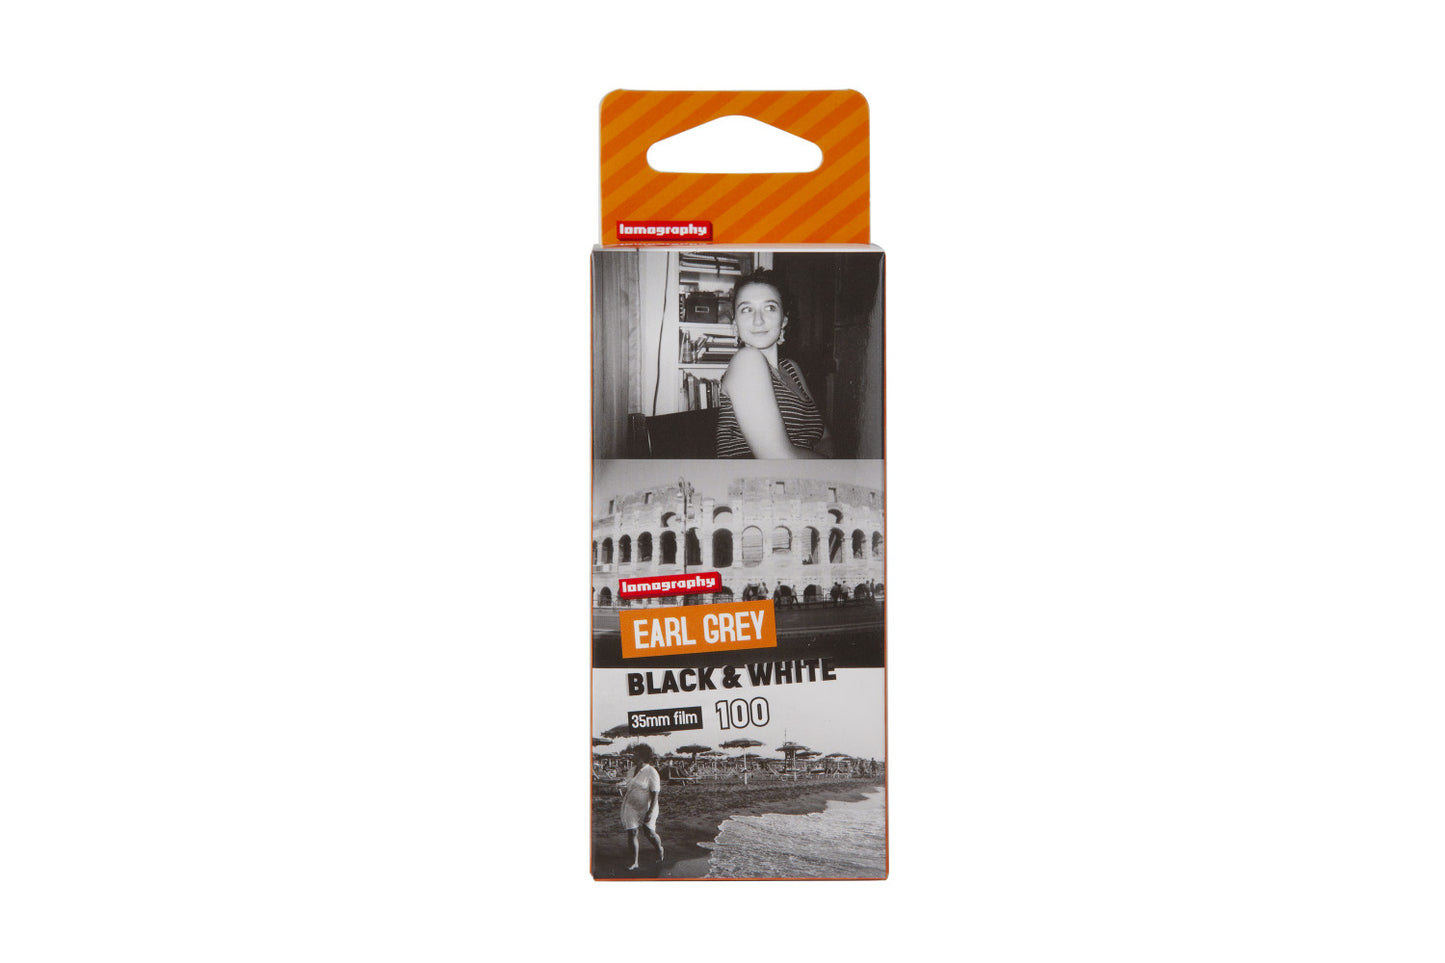 Lomography Earl Grey B&W 100 ISO 35mm Film 3 Pack